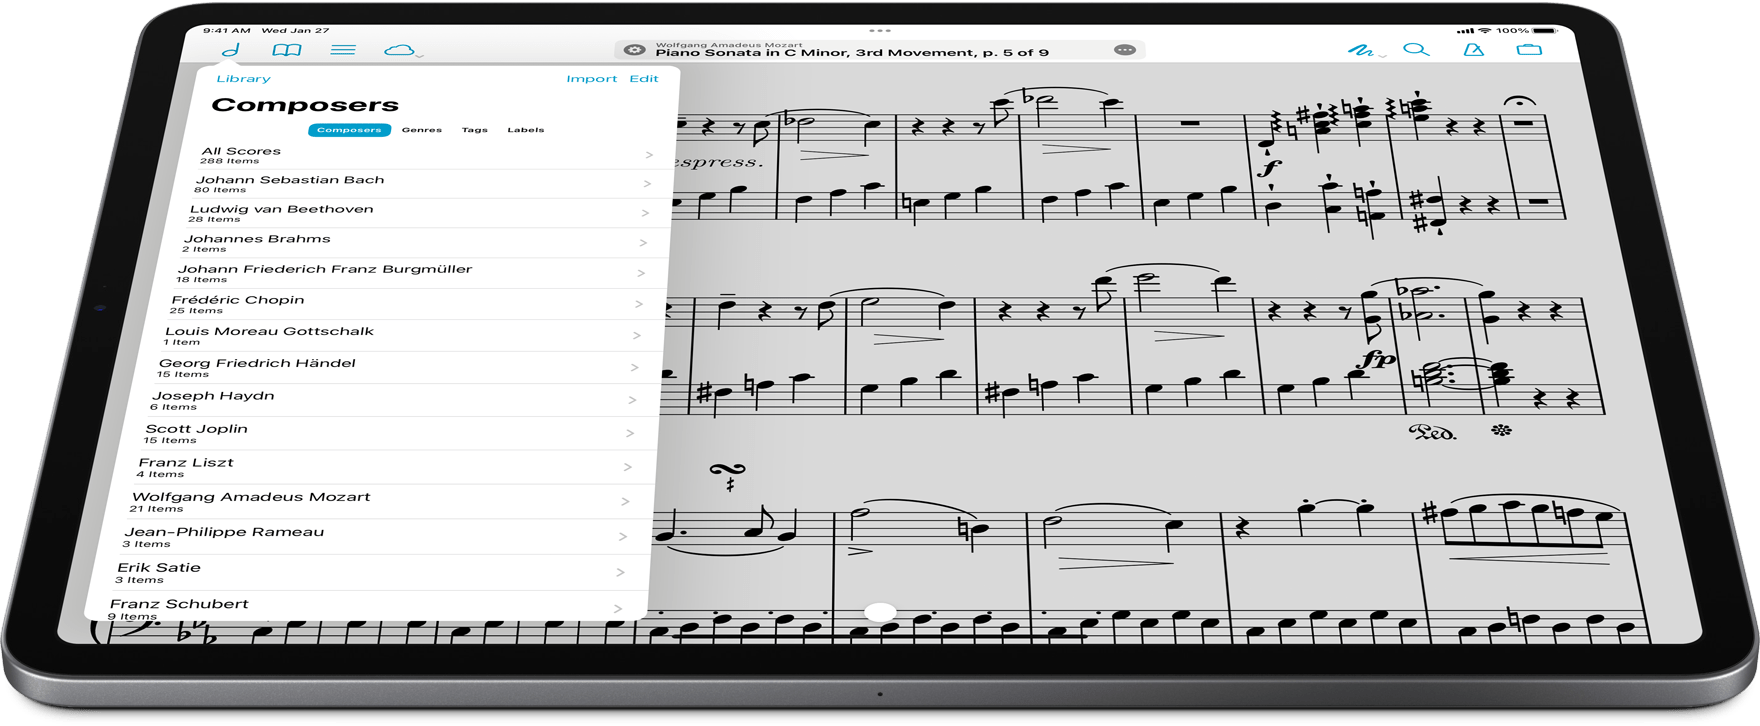 create-your-own-sheet-music-app-sheet